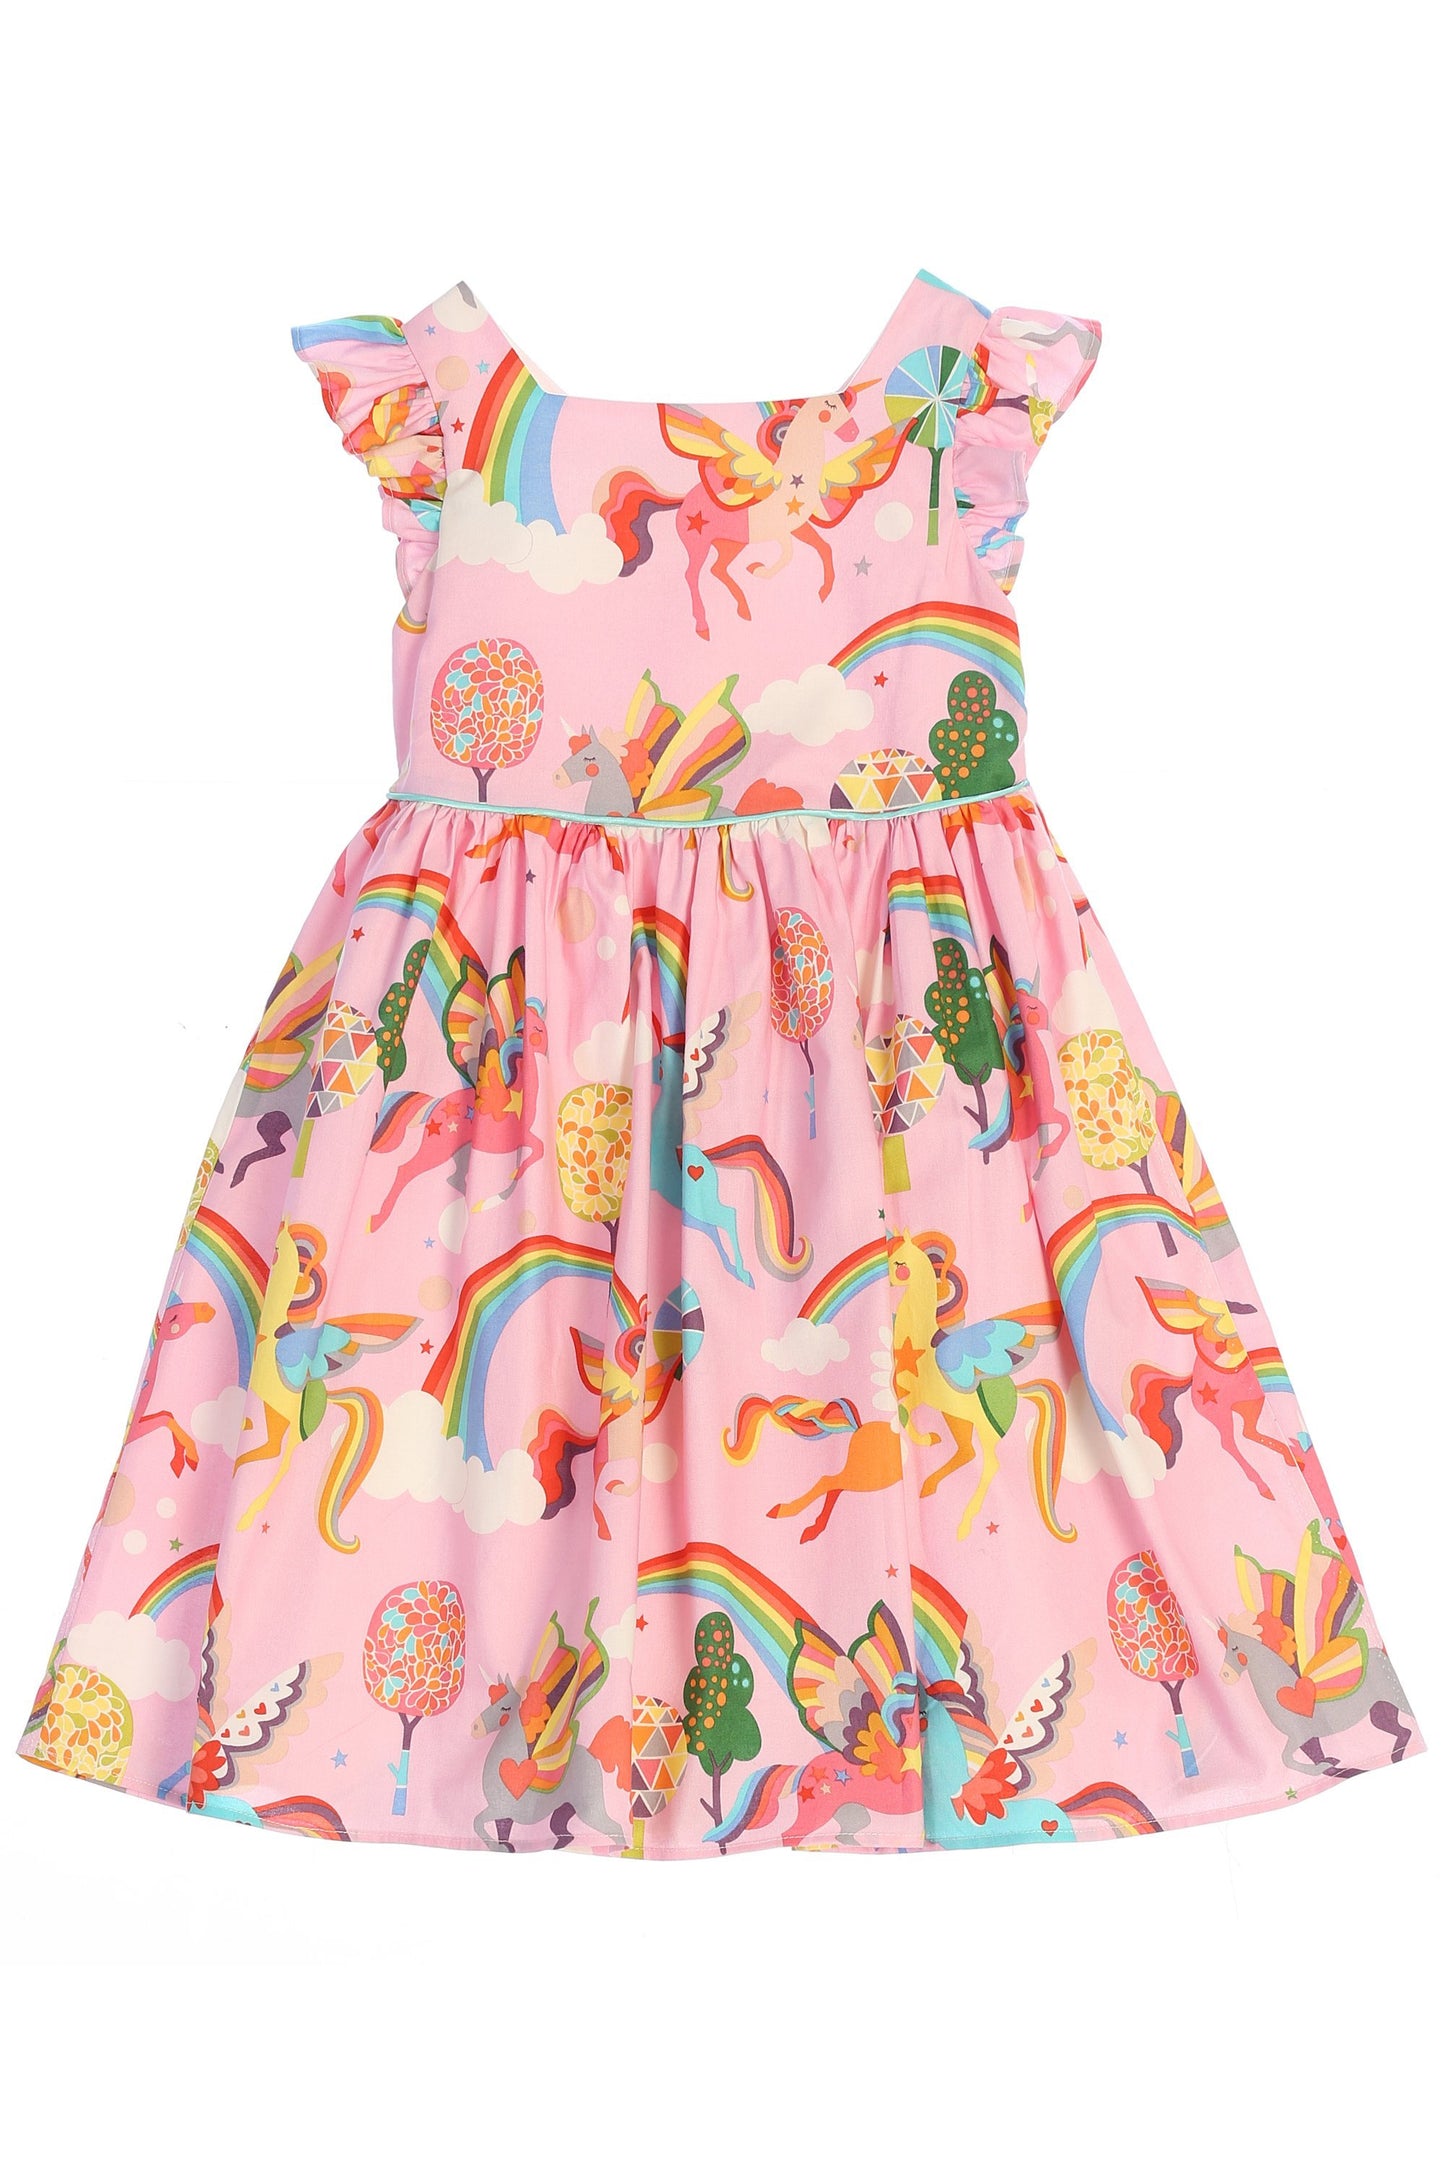 Dress - Rainbow Unicorn Girl Dress- Pink